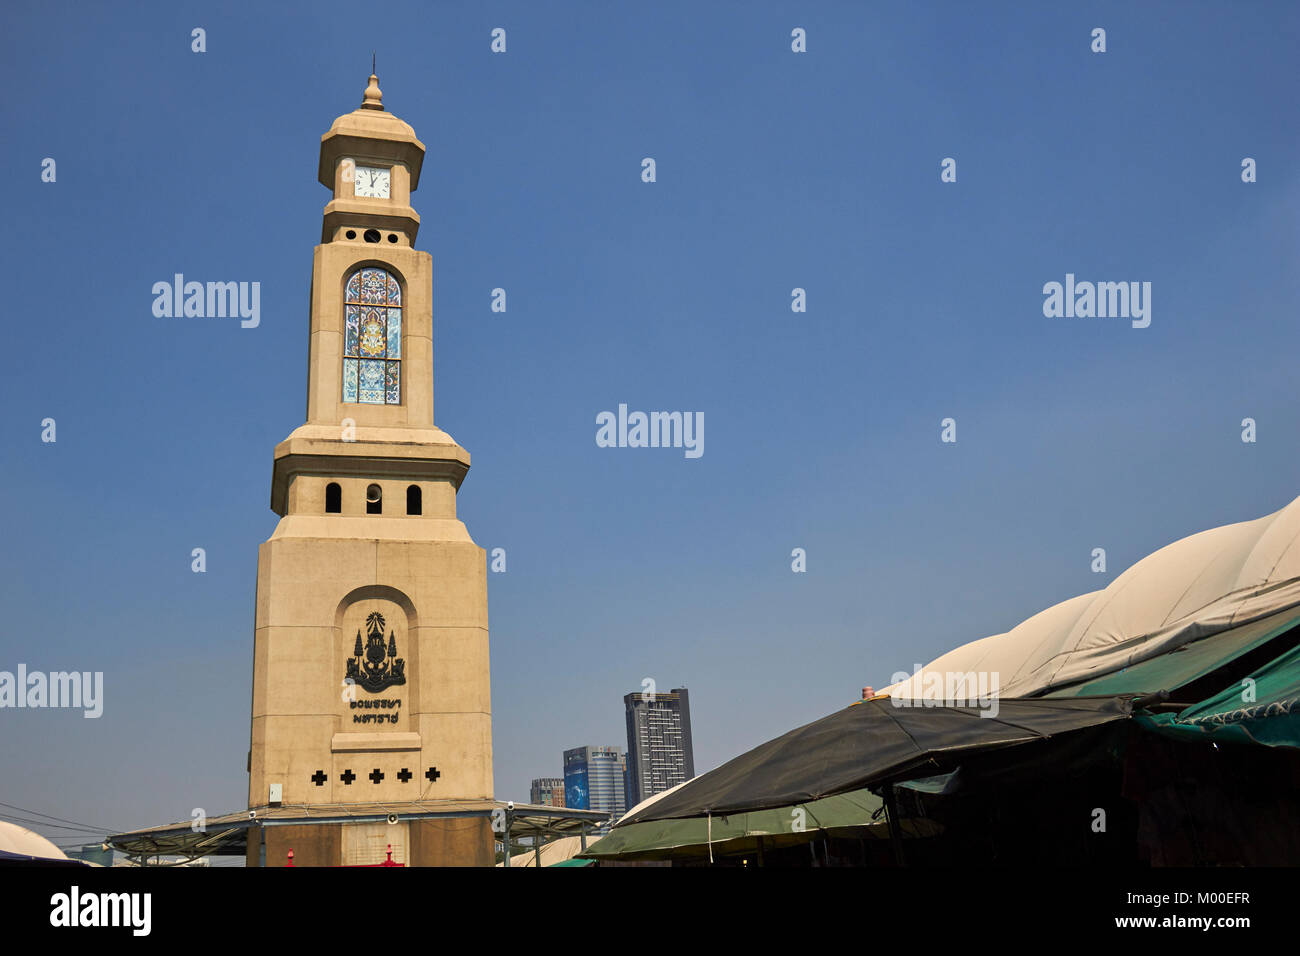 Clock Tower, Chatuchak Market, Bangkok, Thailand Stockfoto